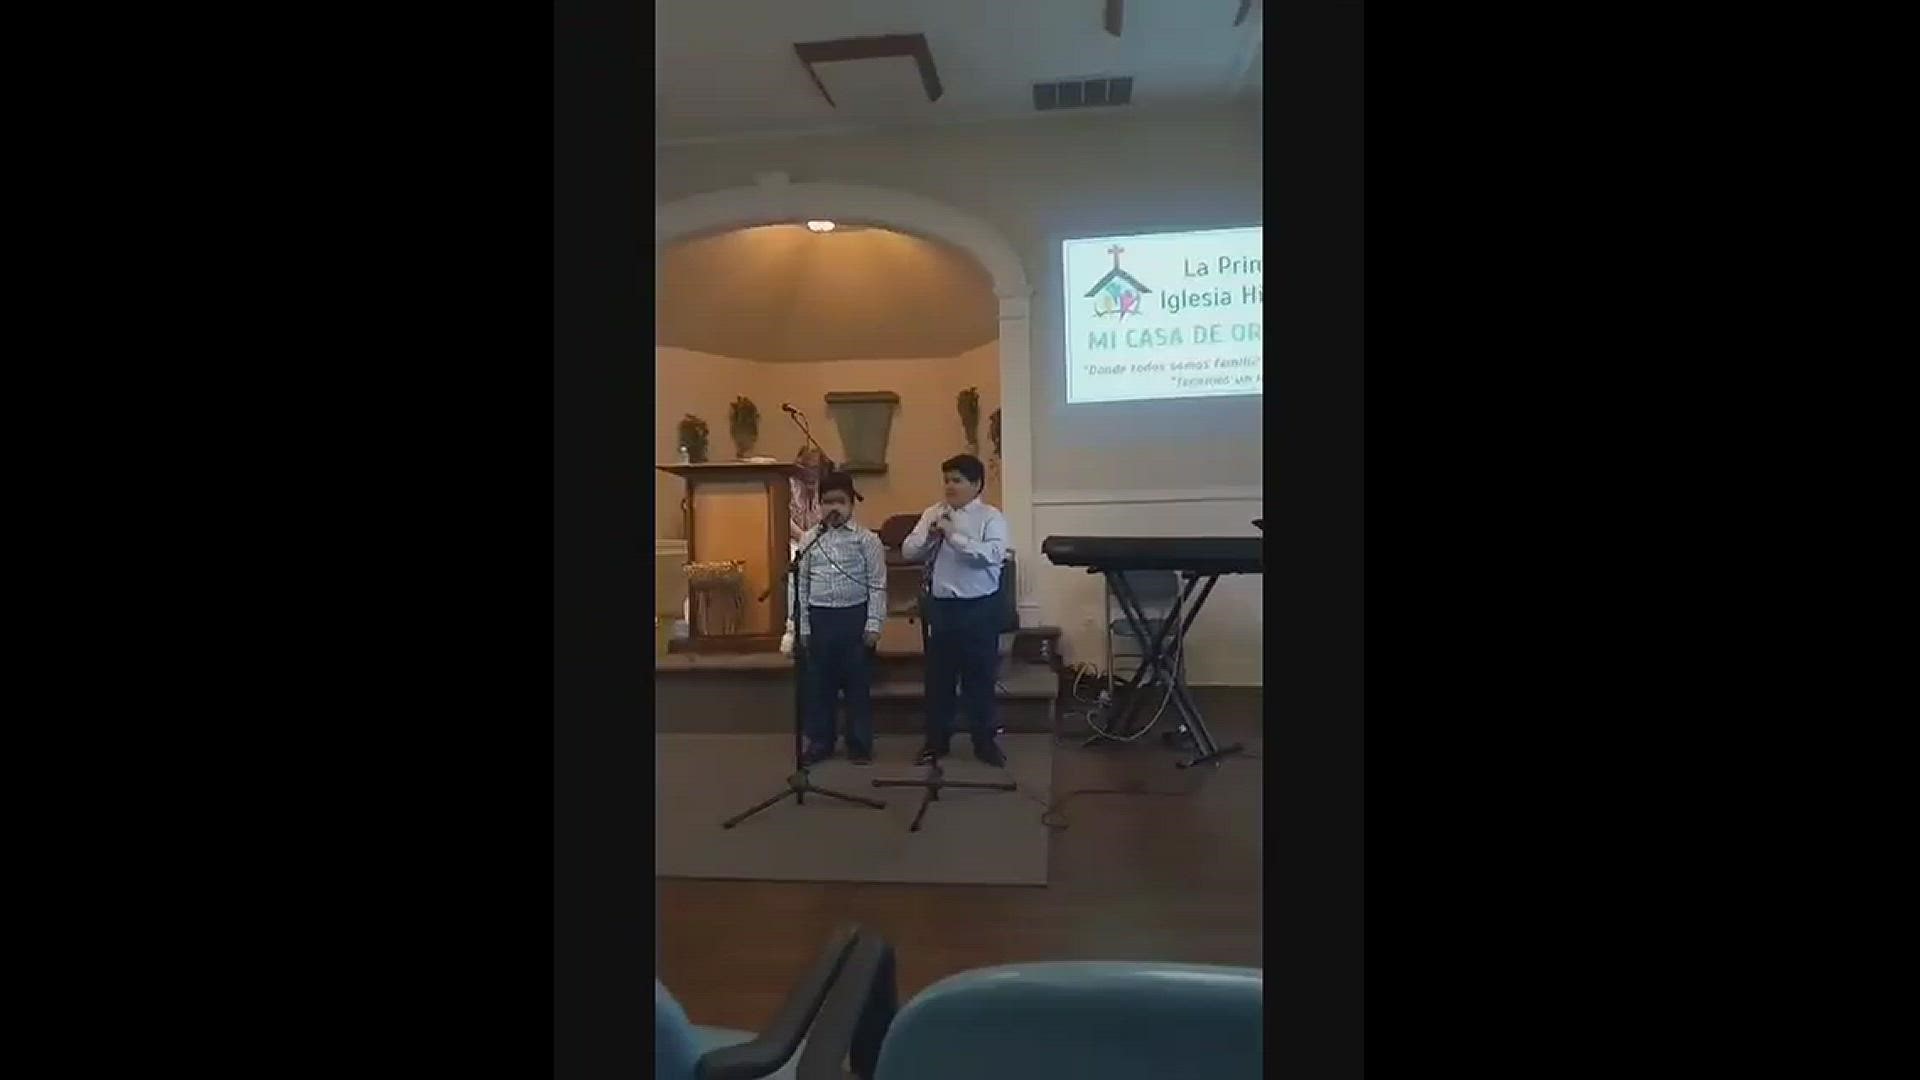 Video provided by Pastor Carmen Rivera